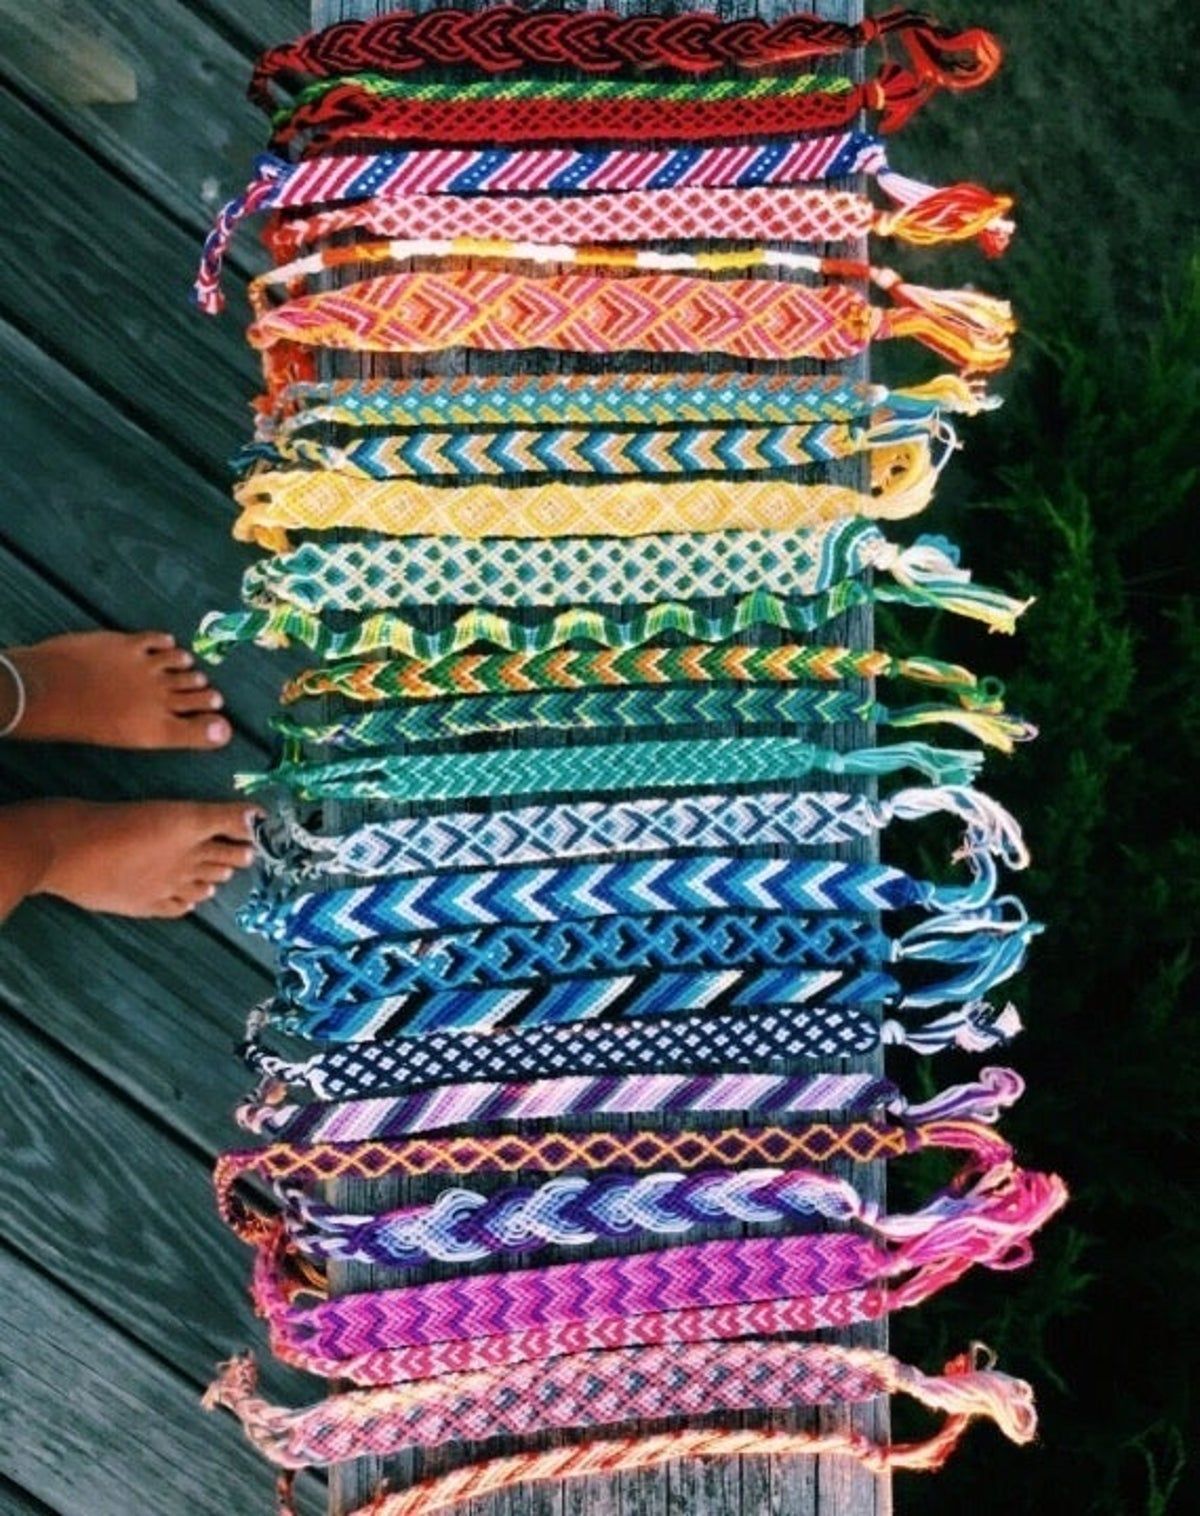 12 diy Bracelets aesthetic ideas